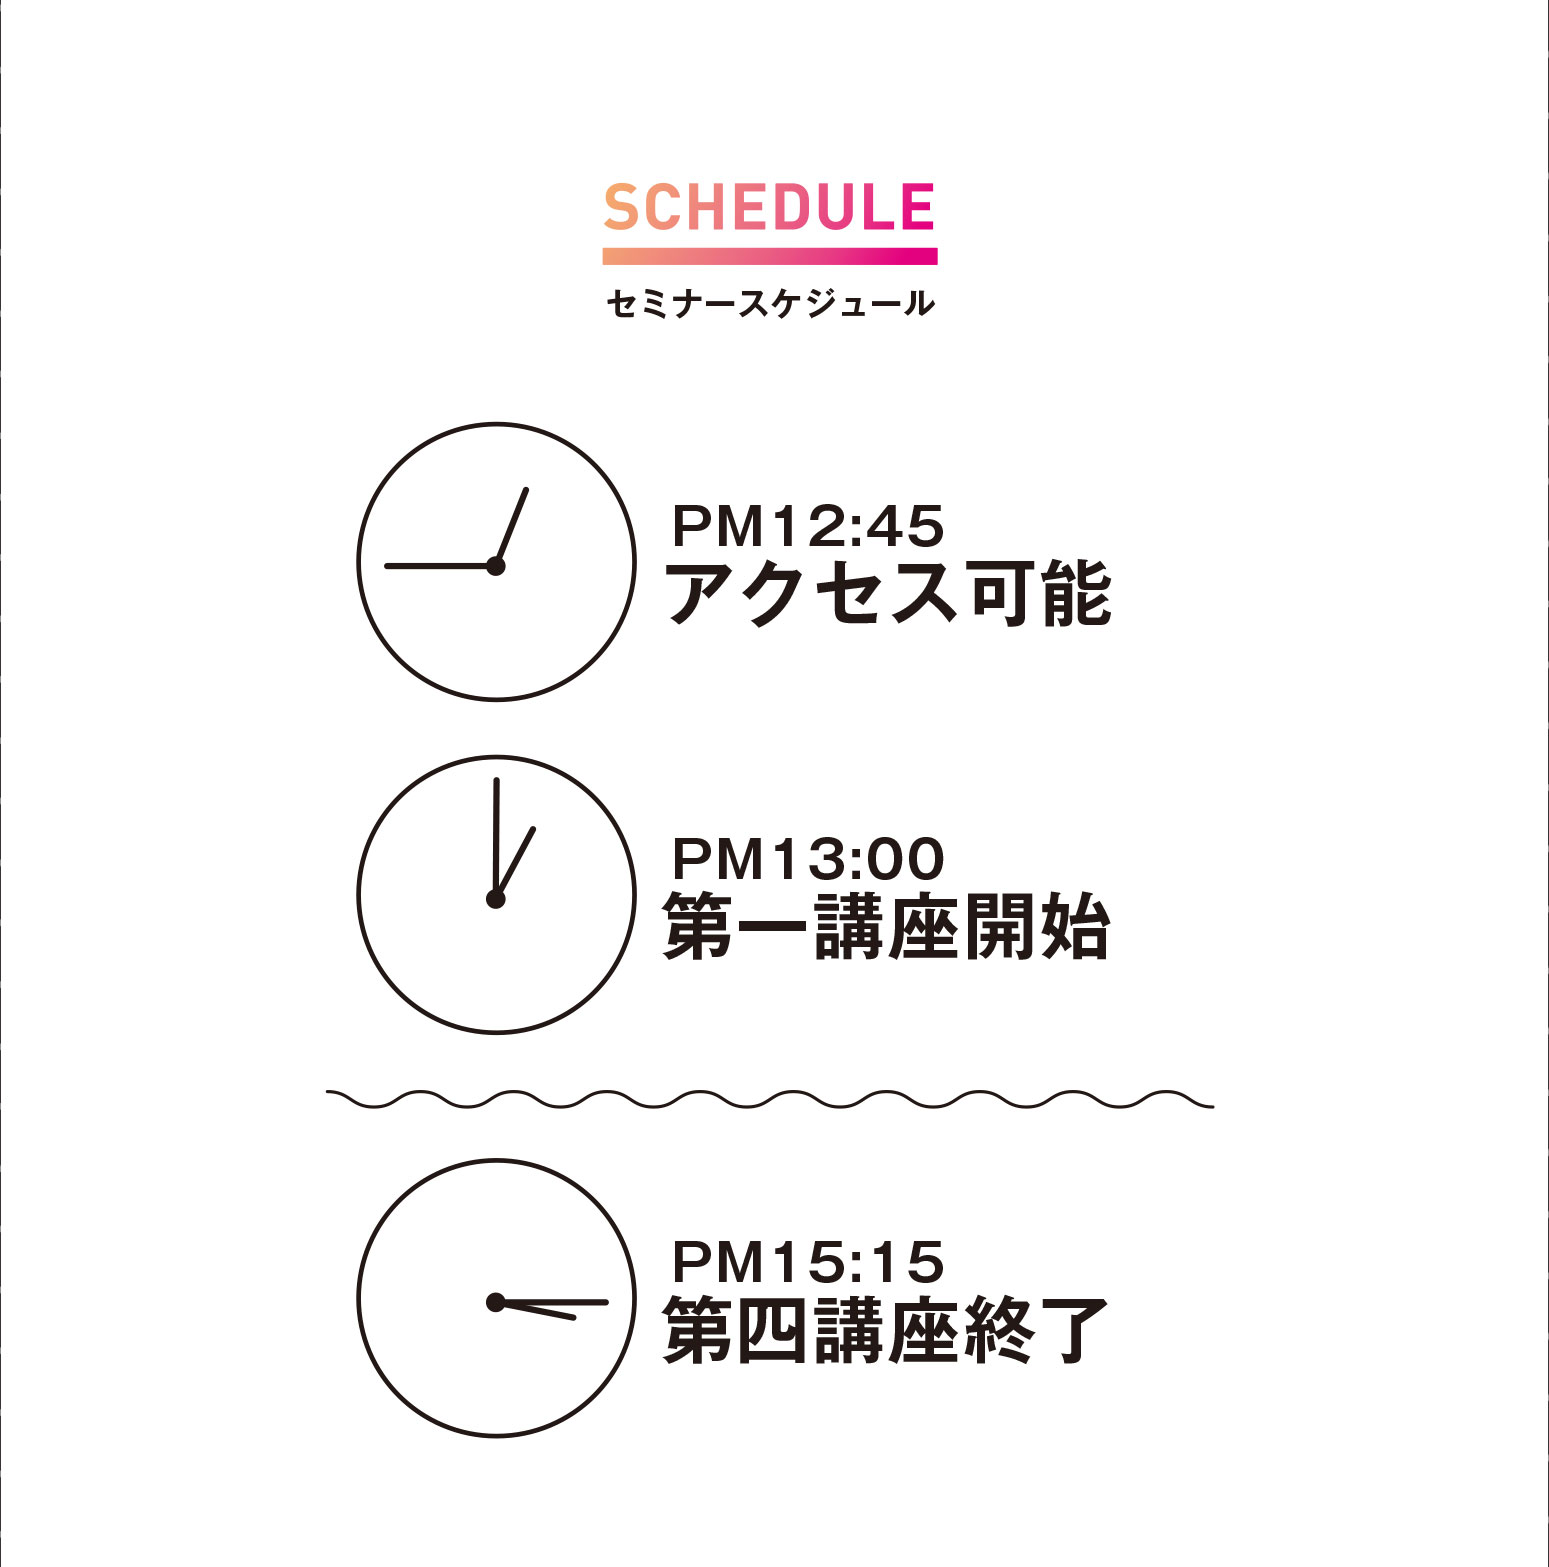 PM15:15第四講座終了 PM13:00第一講座開始 PM12:45アクセス可能